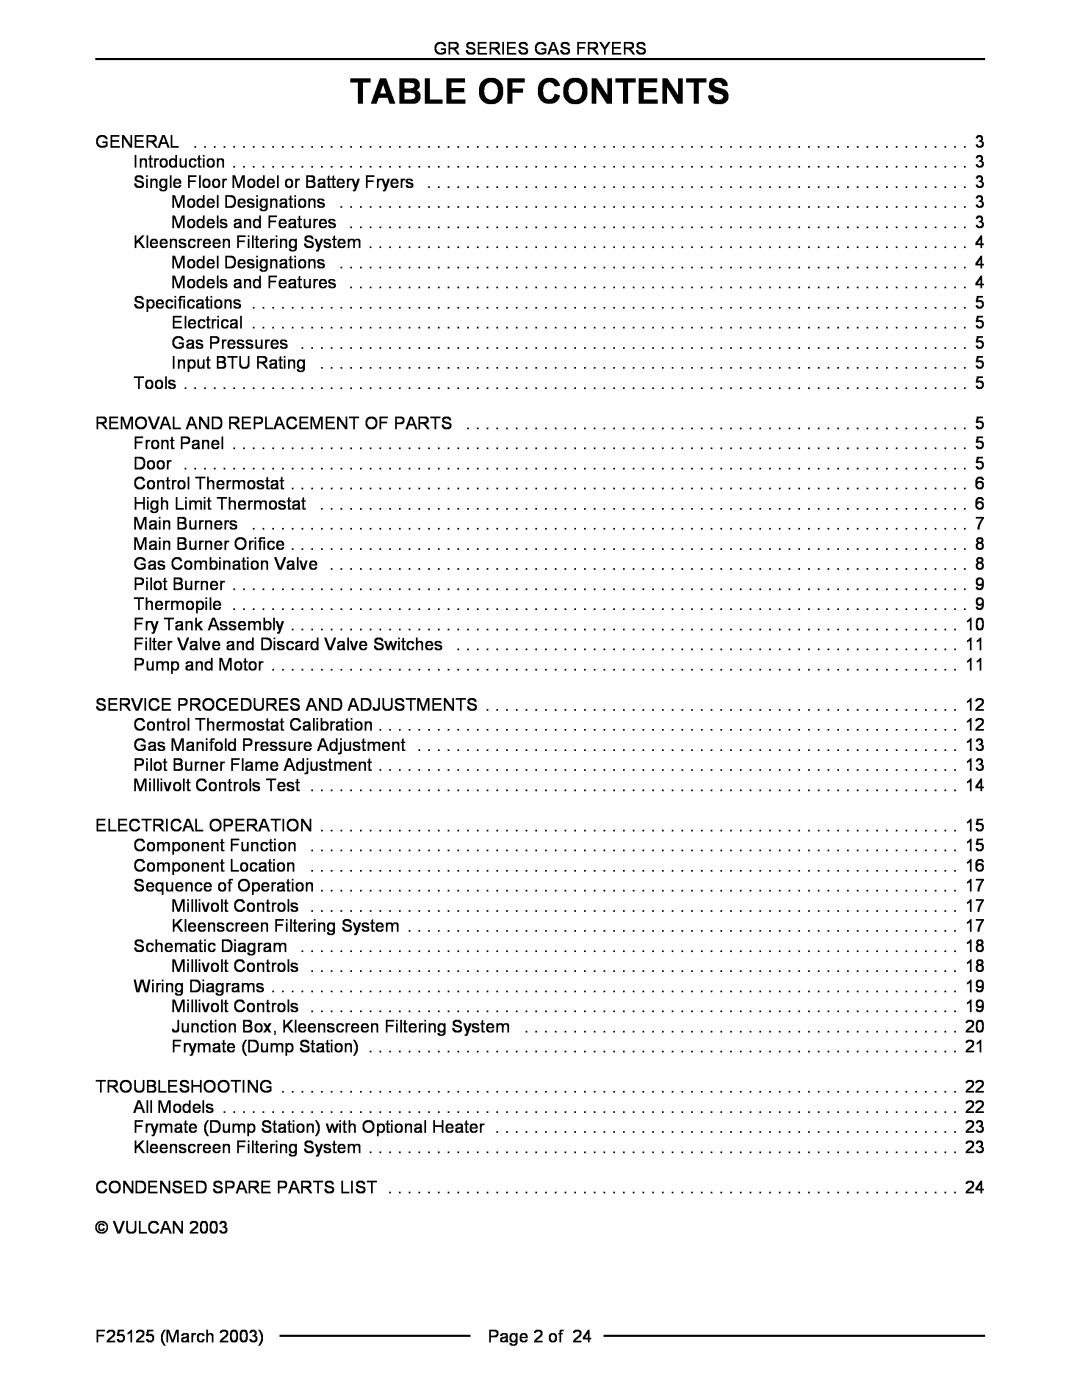 Vulcan-Hart GR85F, GR65F, GR35F, GR45F, GR25 service manual Table Of Contents 